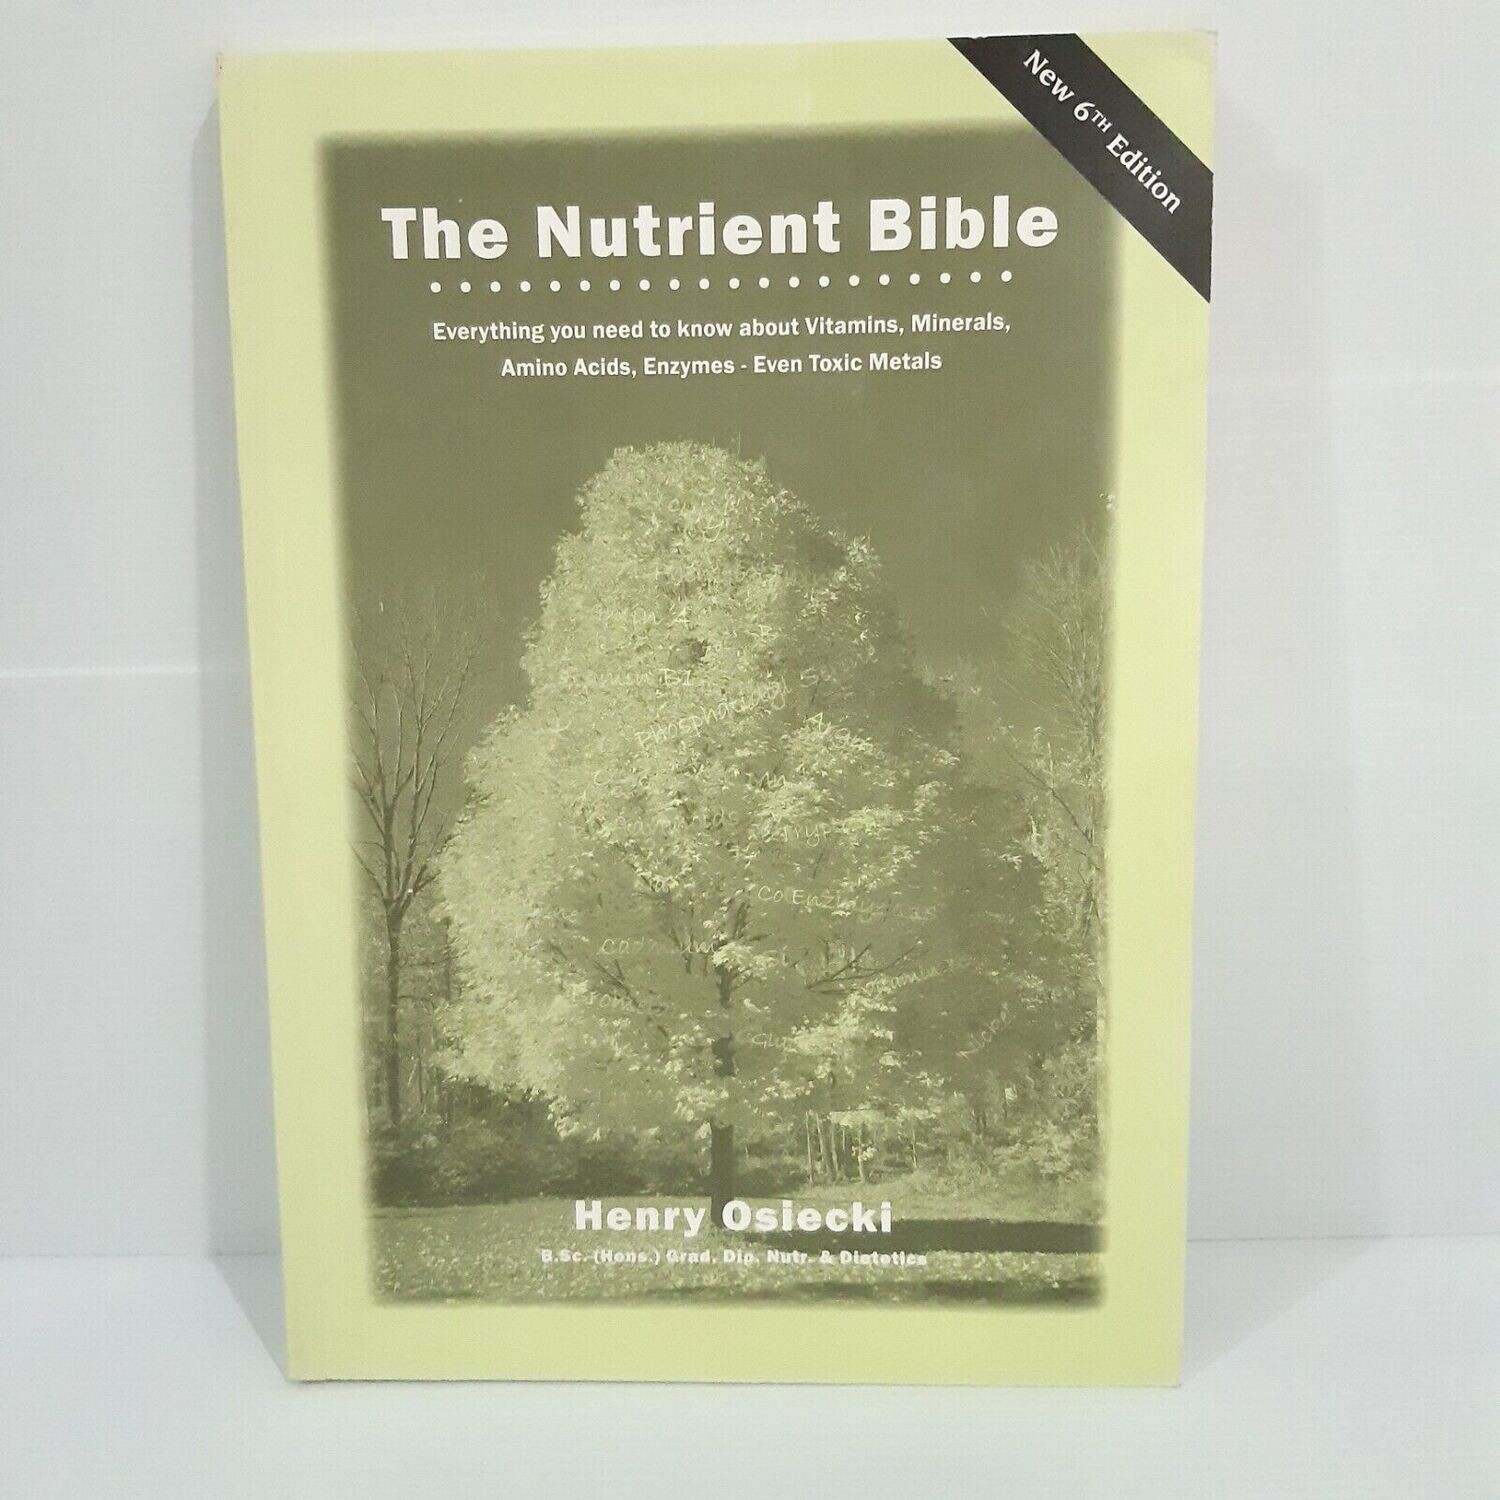 The nutrient bible (Osiecki)